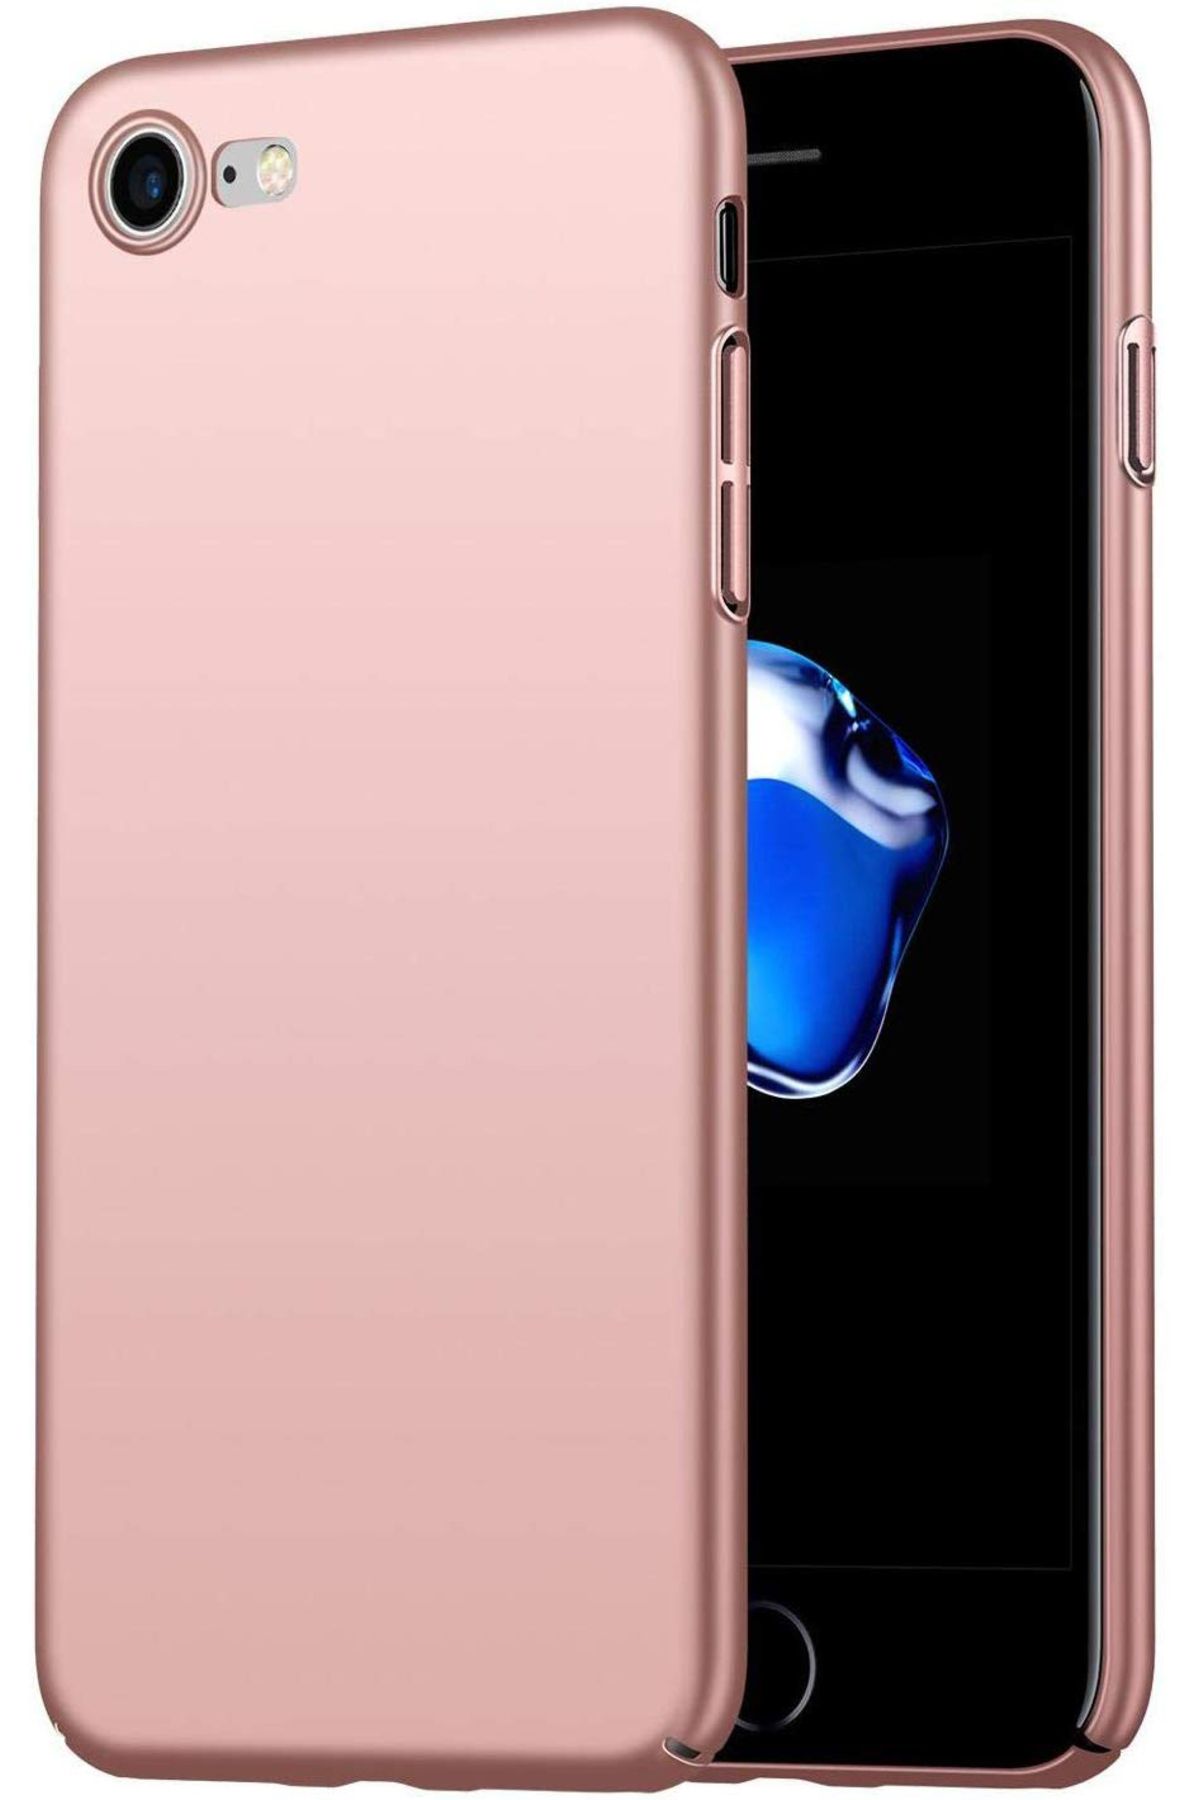 Moraksesuar Iphone 6s Plus Uyumlu Kılıf Ultra Ince Renkli Silikon Kapak Rose Gold